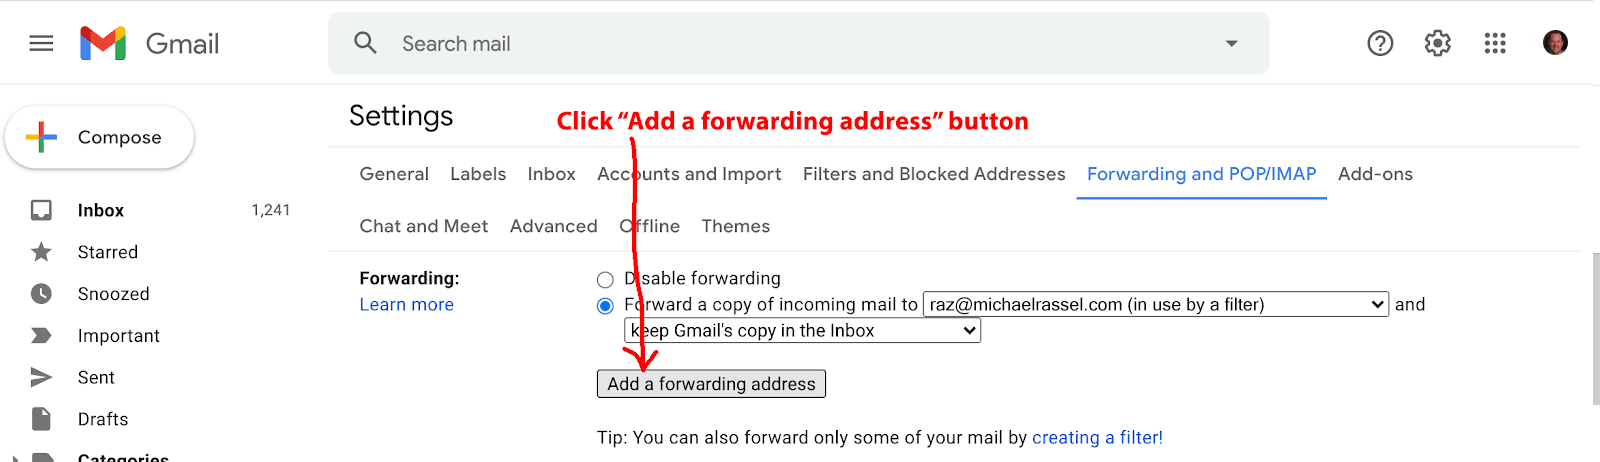 gmail-forwarding-4a